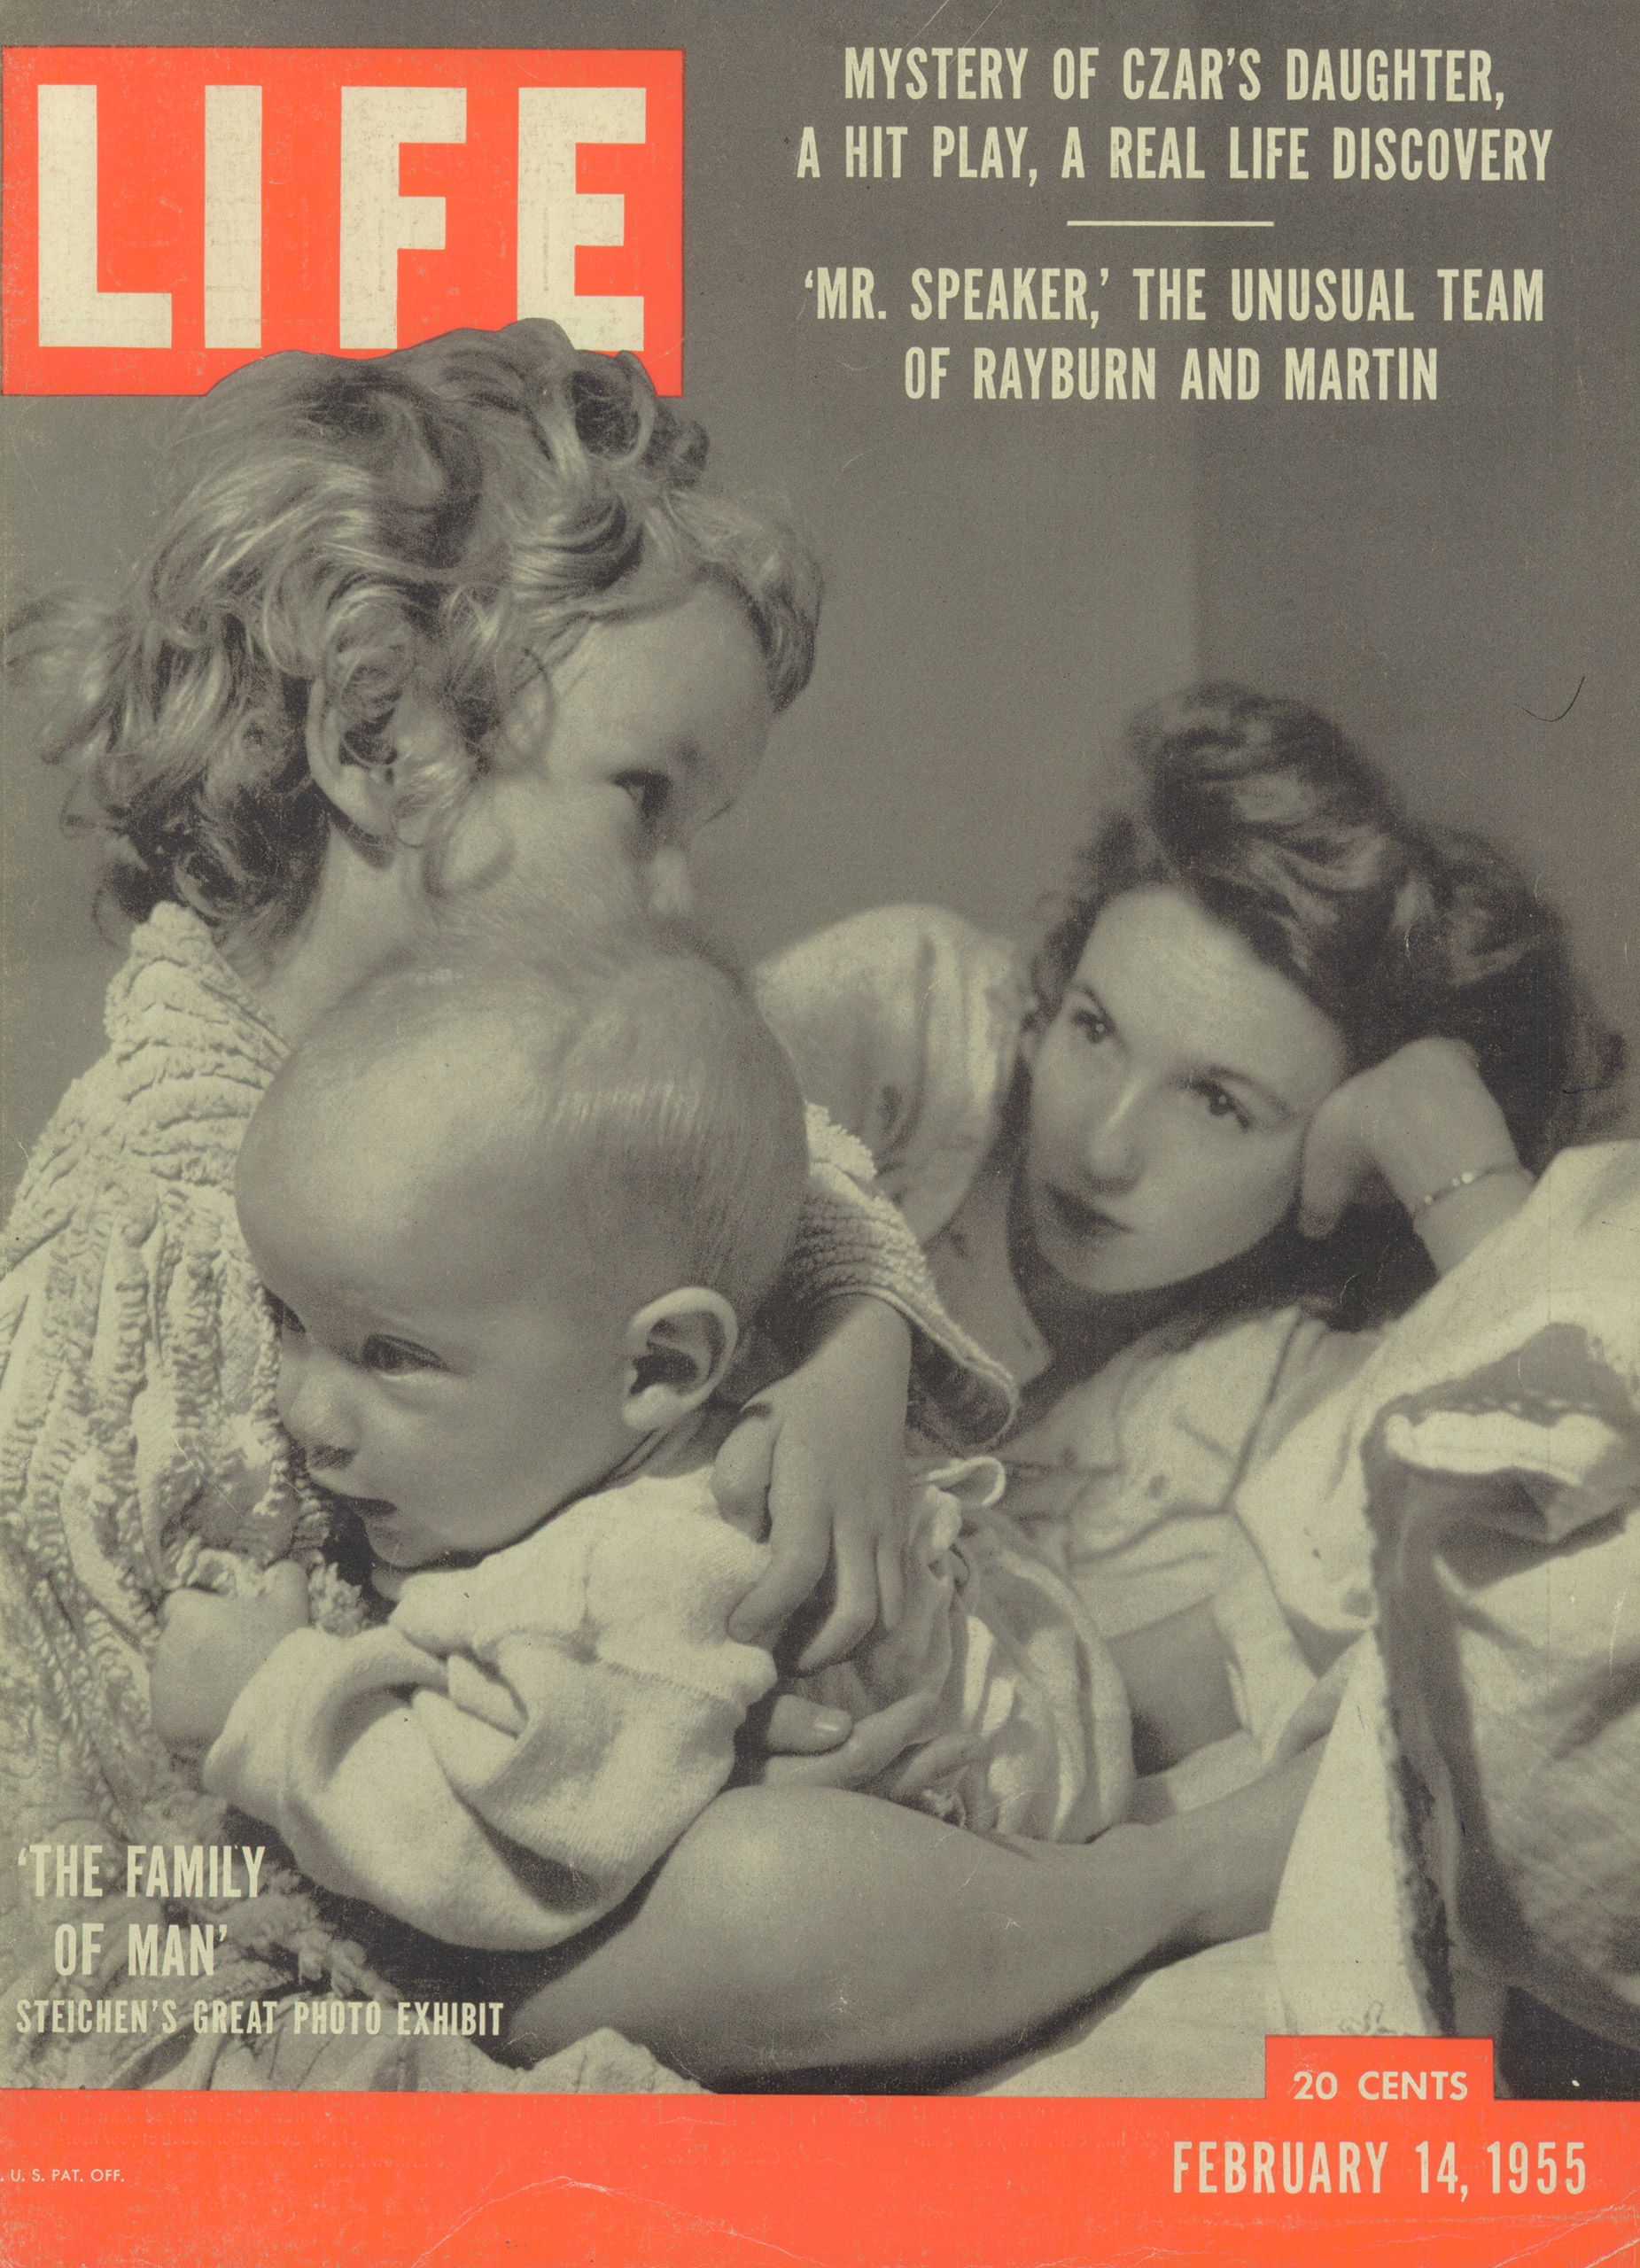 Feb. 14, 1955 cover of LIFE magazine.